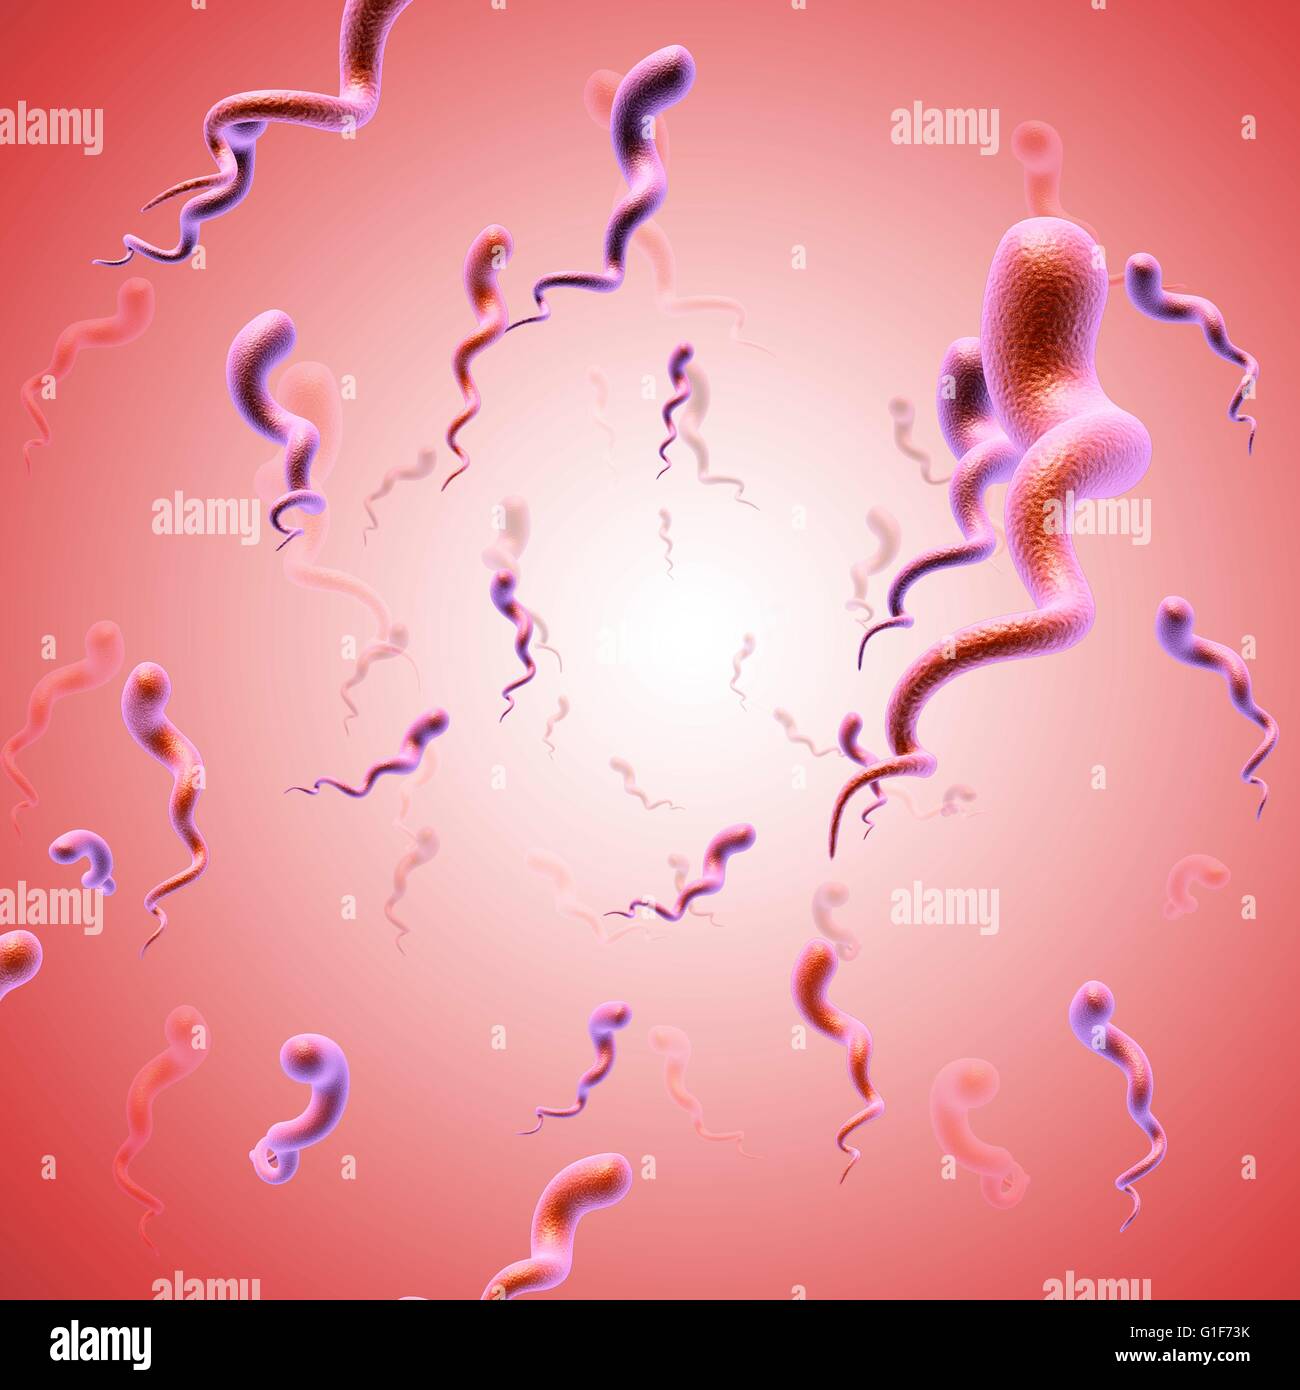 Sifilis fotografías e imágenes de alta resolución - Alamy